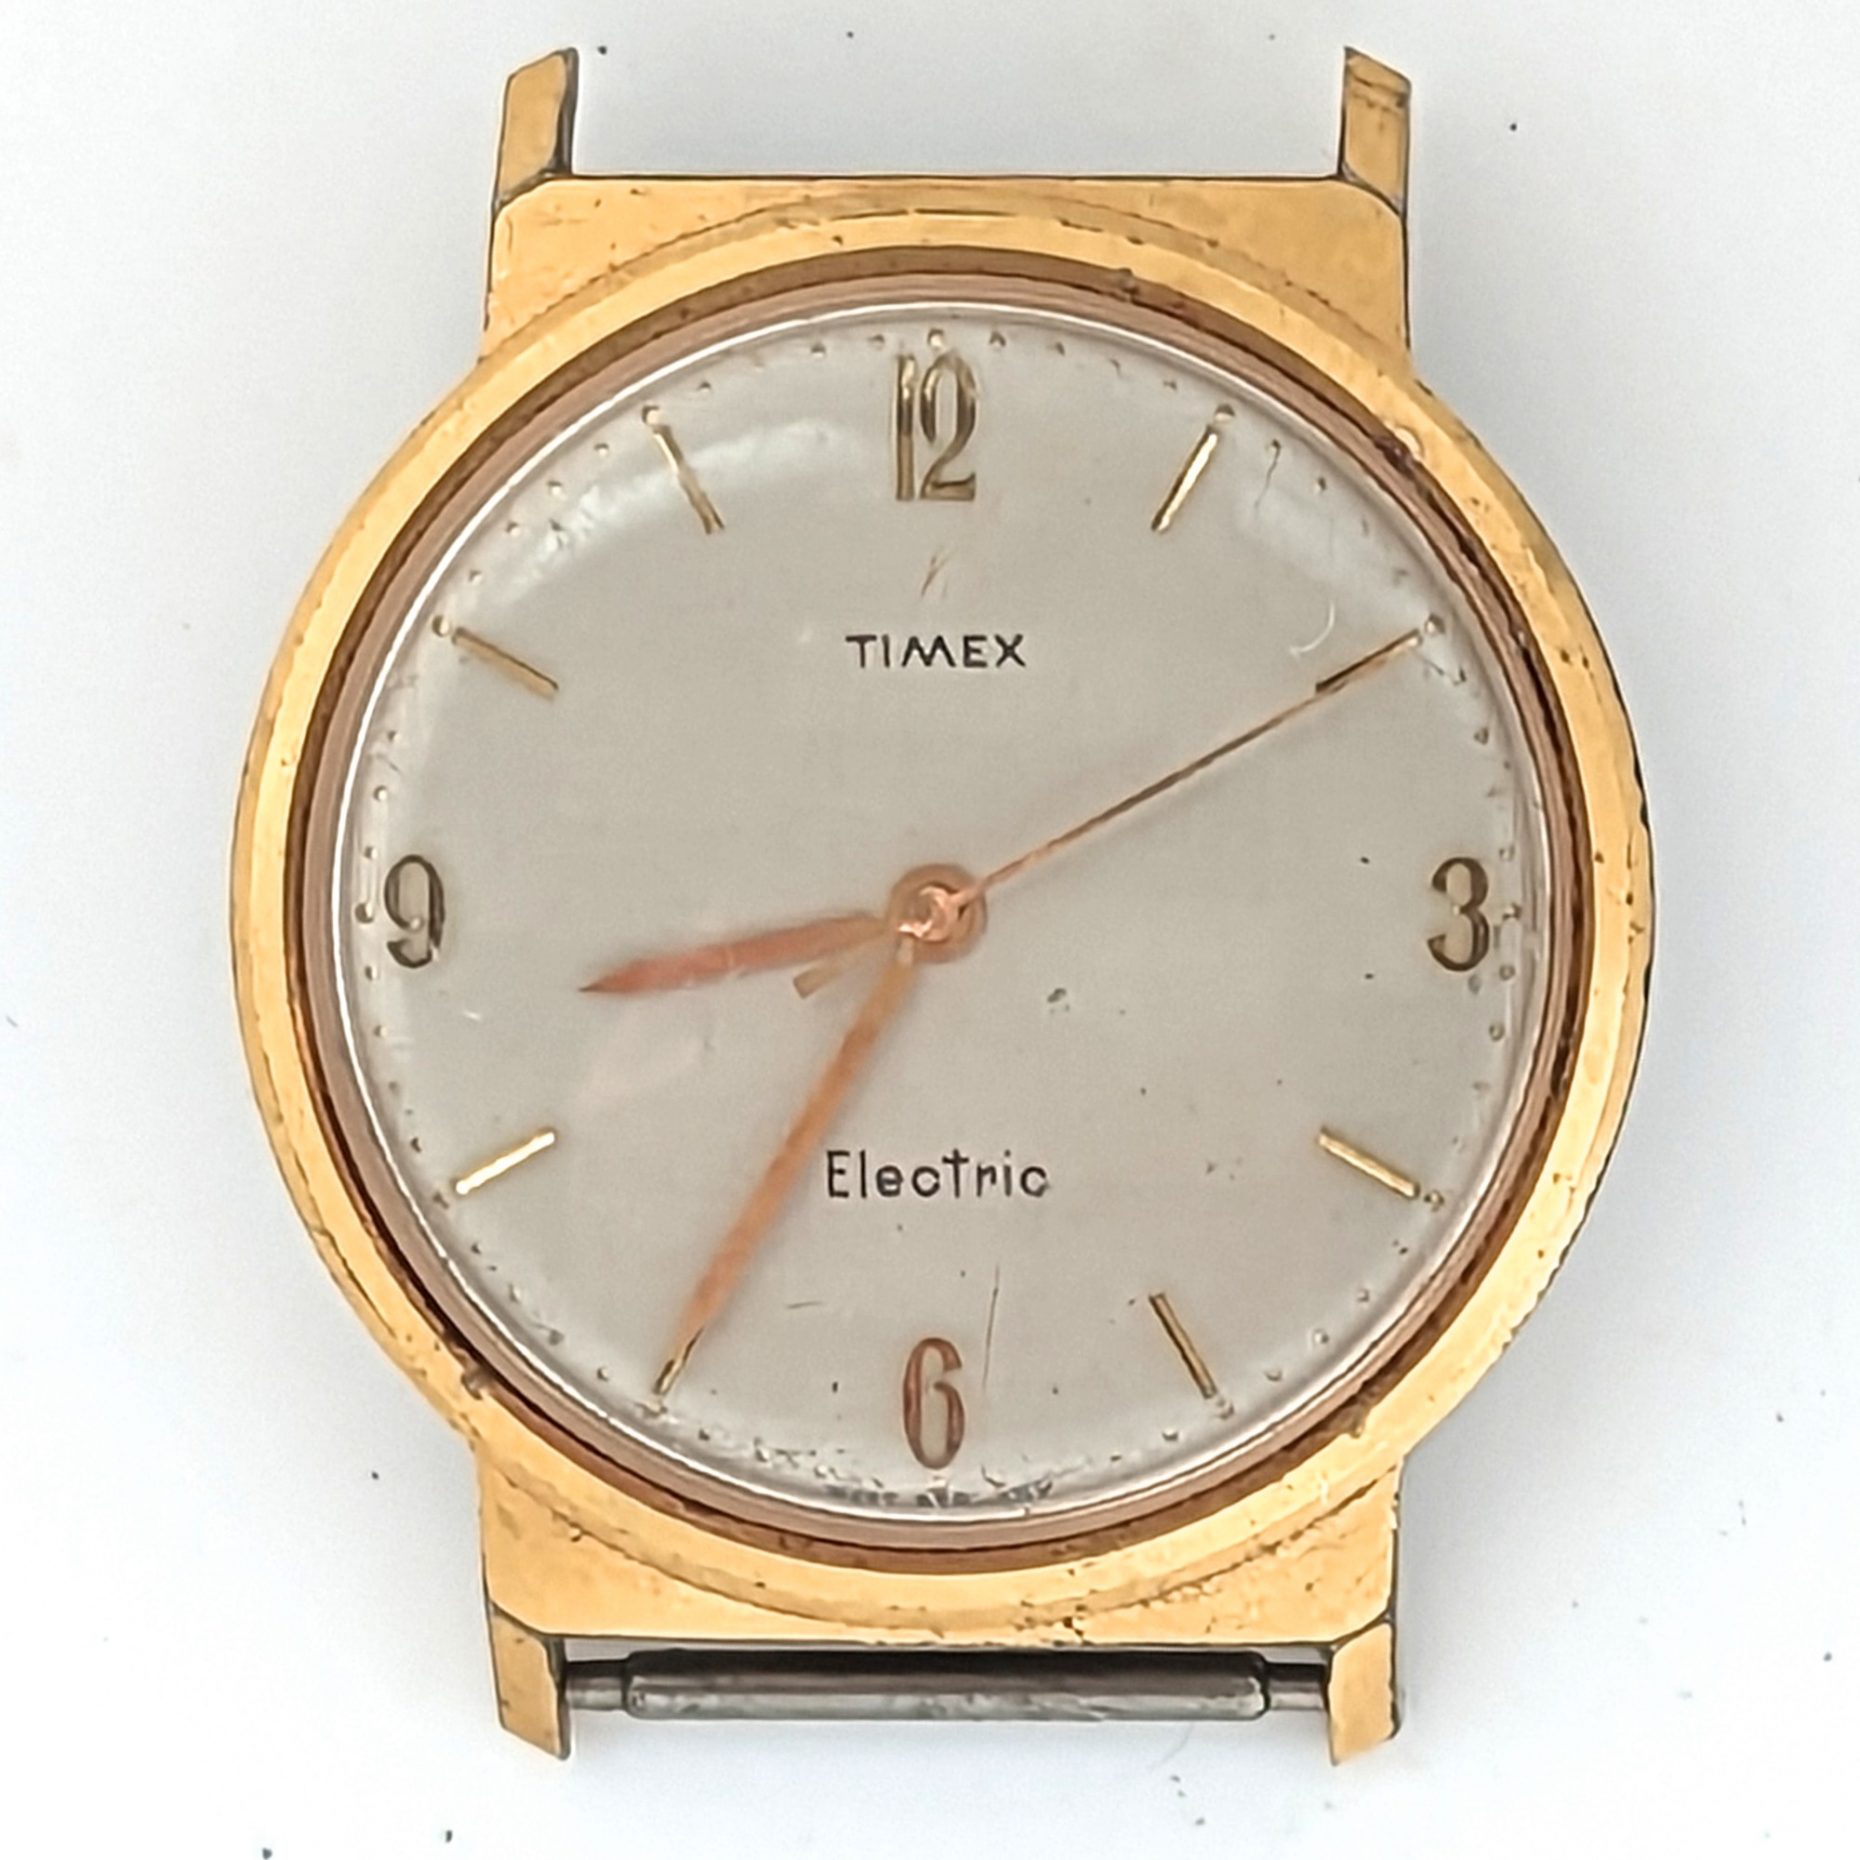 Timex Electric 9024 6762 [1962]